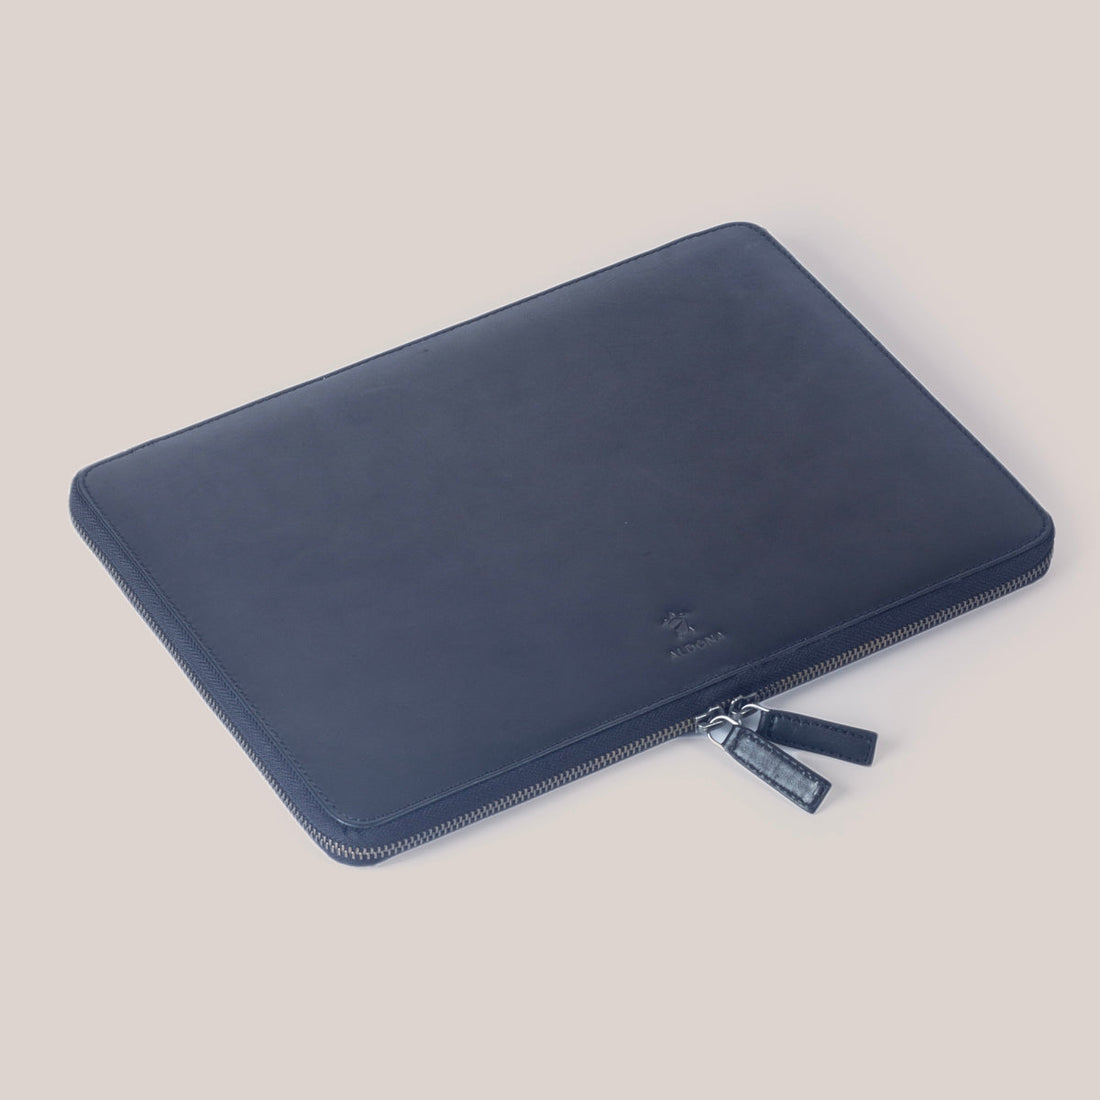 Microsoft Surface Laptop 13.5 Zippered Laptop Case - Felt and Tan Crunch